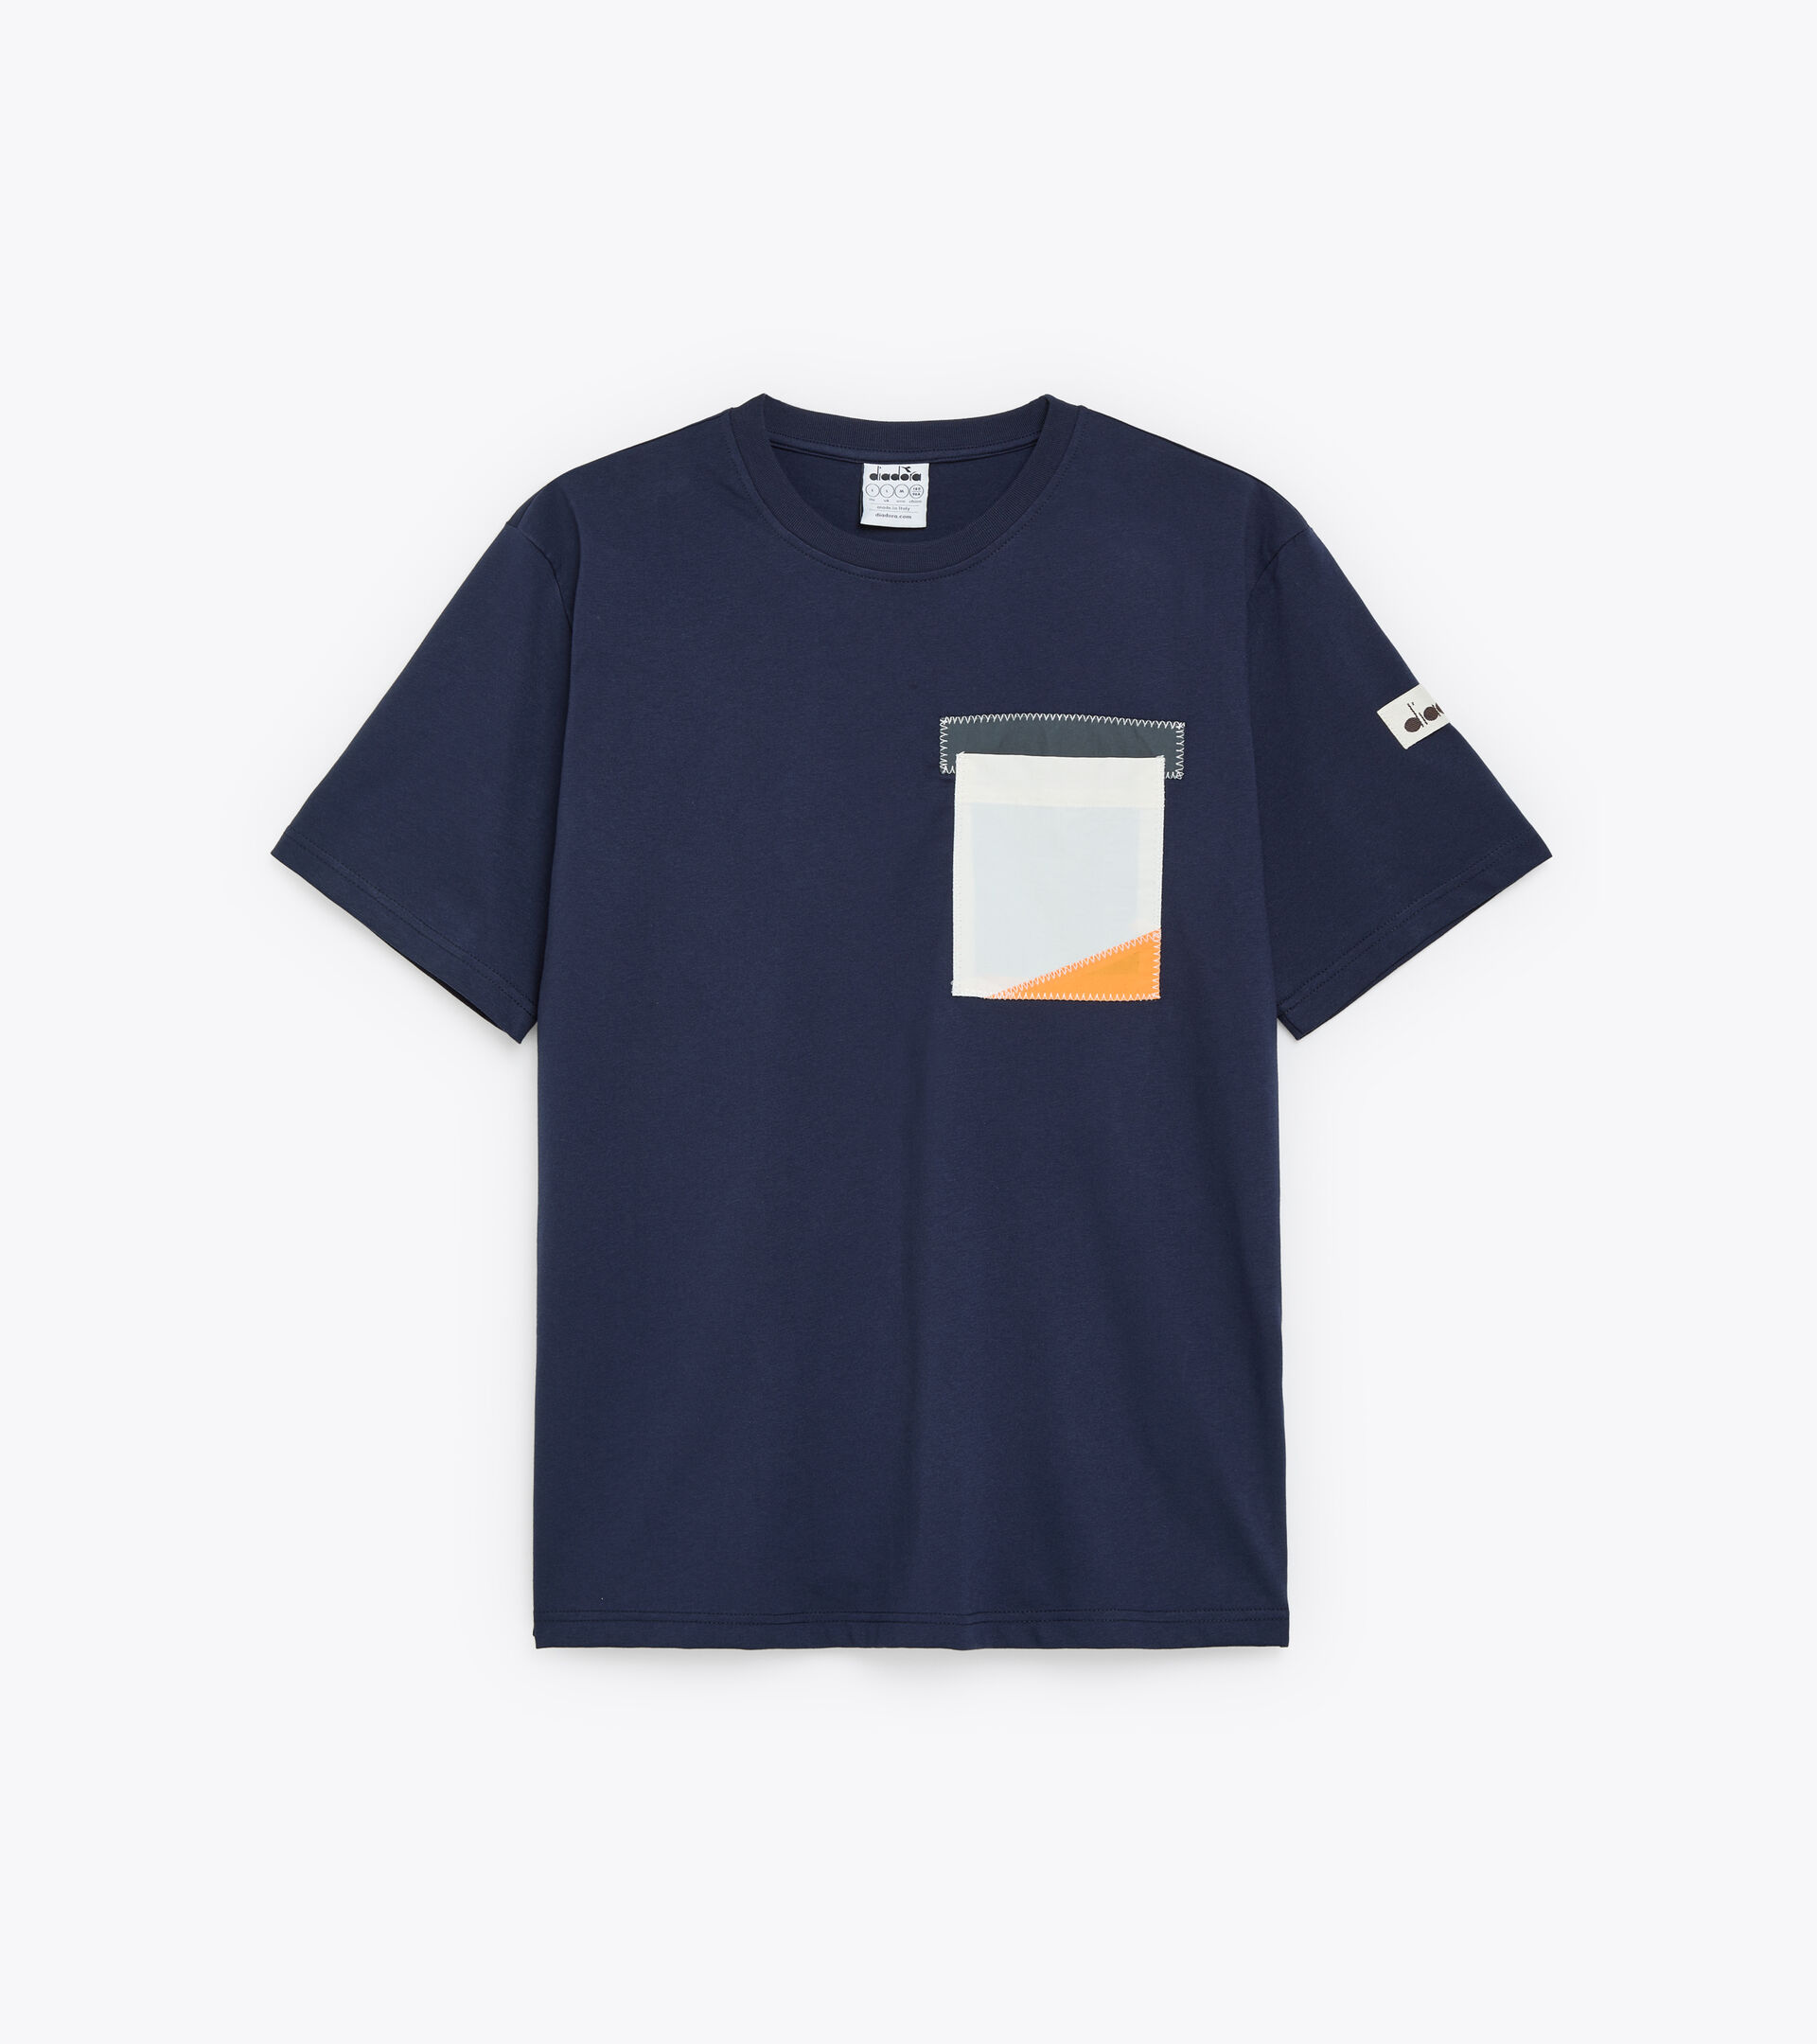 Made in Italy t-shirt - Men  T-SHIRT SS 2030 BLUE CORSAIR - Diadora